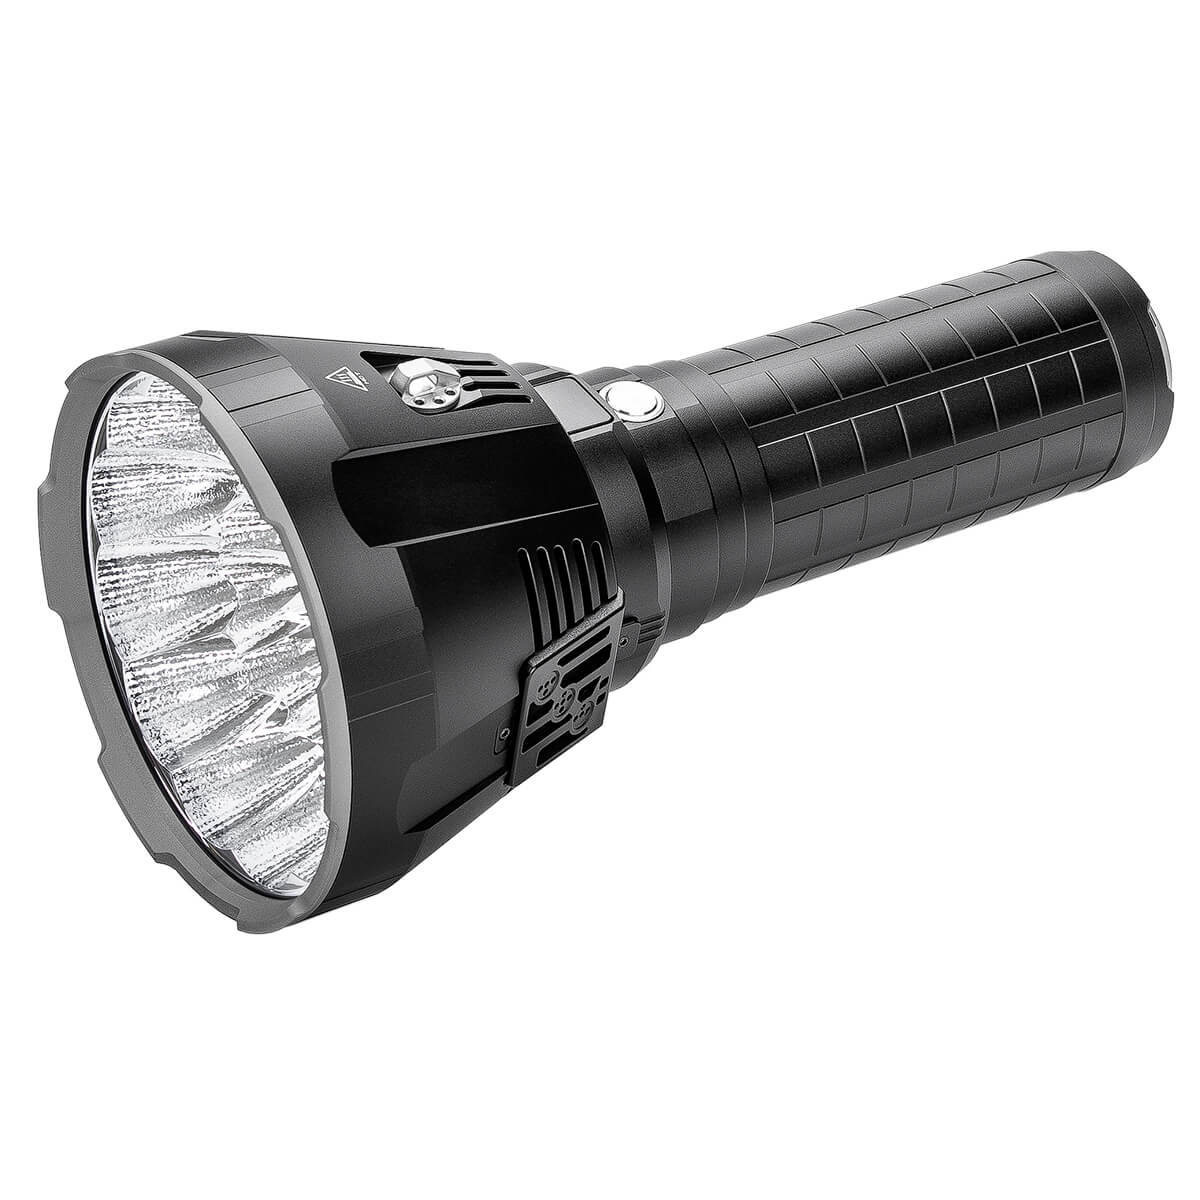 Imalent Switzerland - Imalent MS18 LED searchlight with 100000 lumens